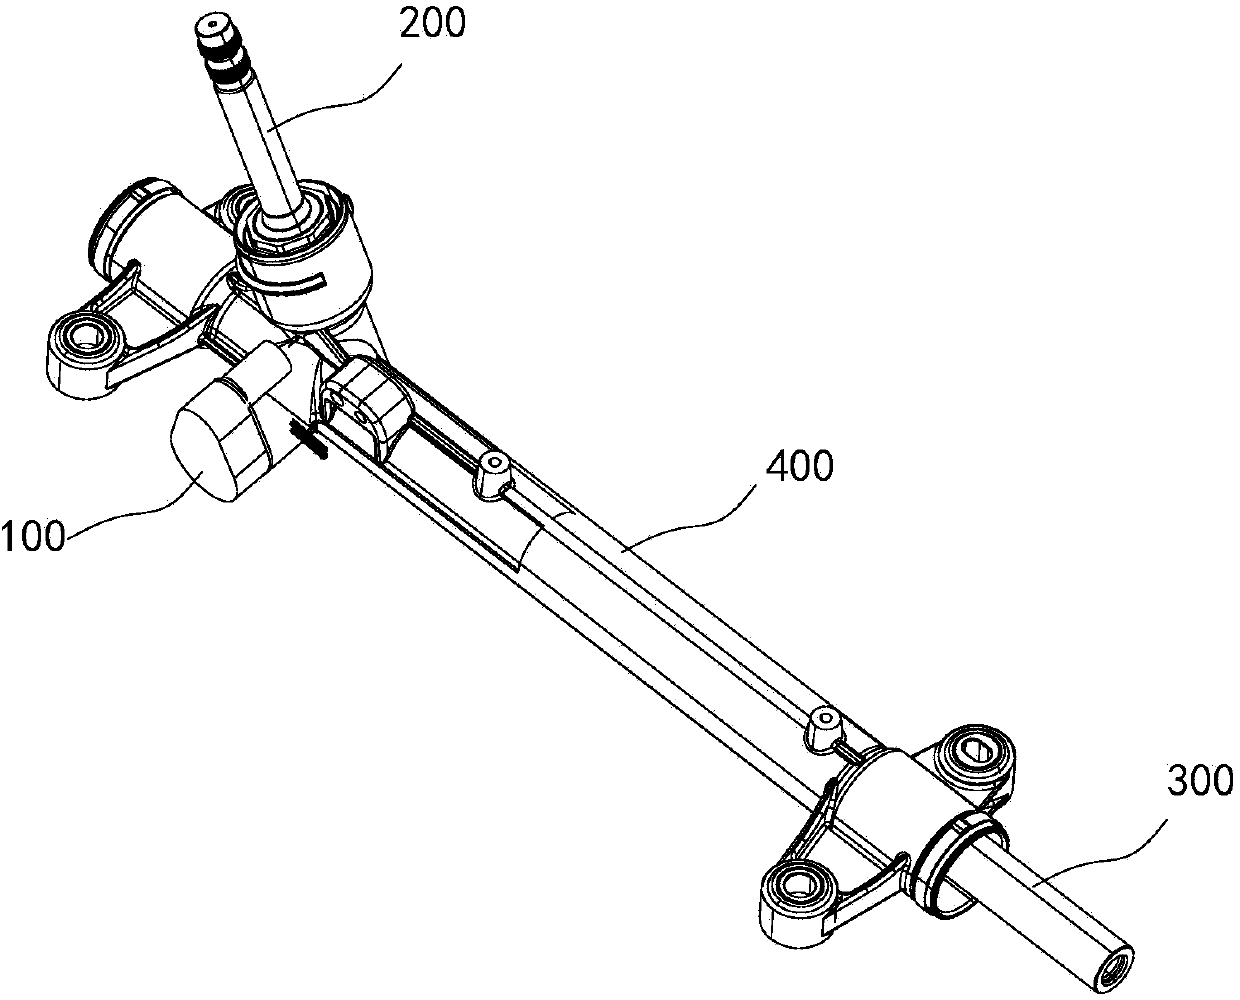 Steering gear, clearance adjusting mechanism of steering gear and vehicle